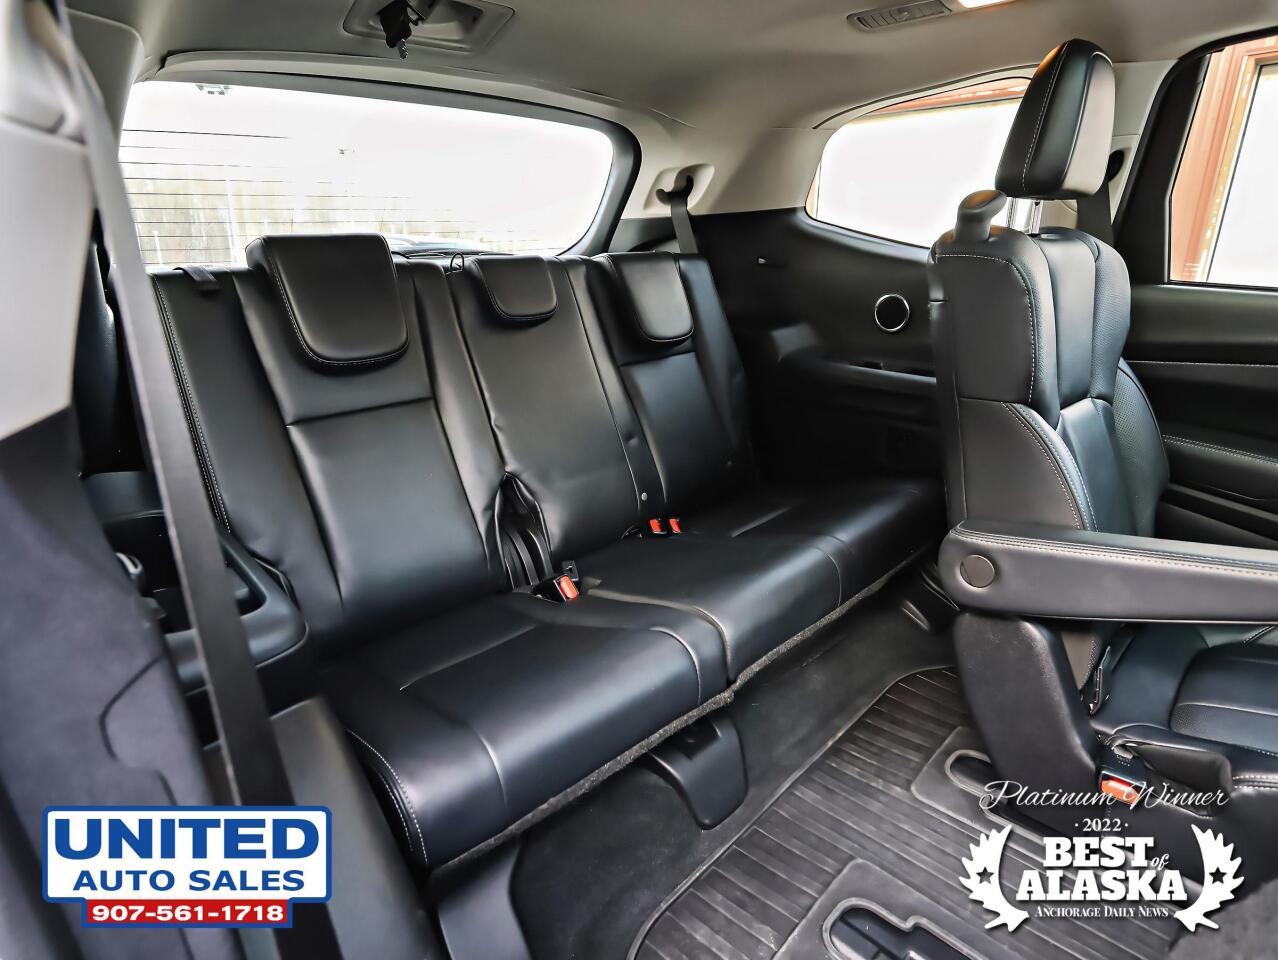 2019 Subaru Ascent Limited 7 Passenger AWD 4dr SUV 67